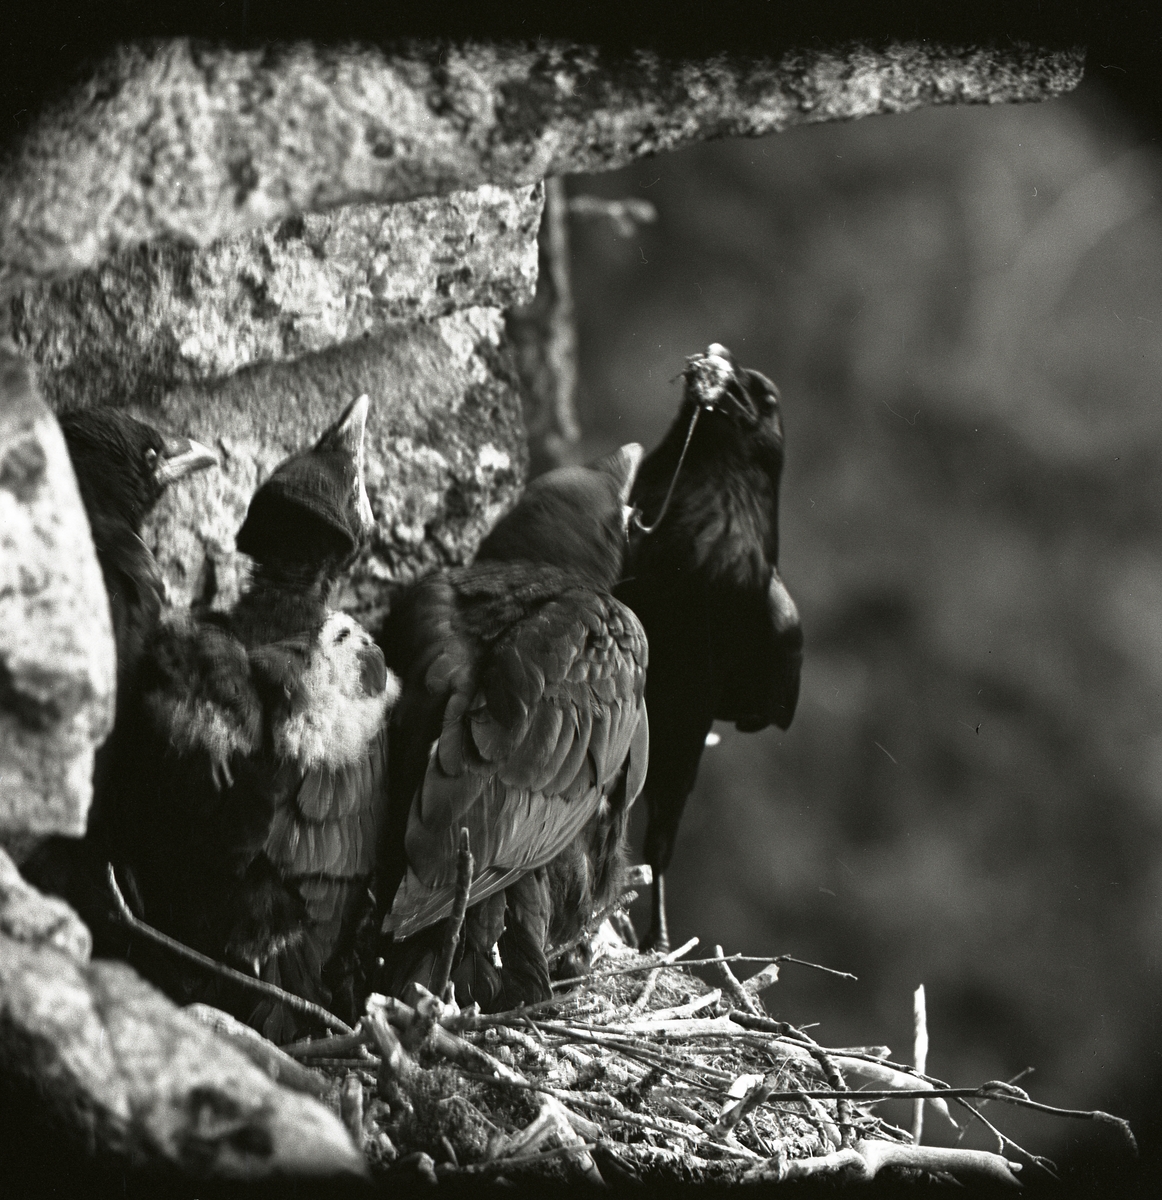 Korpungar matas i bo på ett klippblock, Gruvberget i maj 1962.